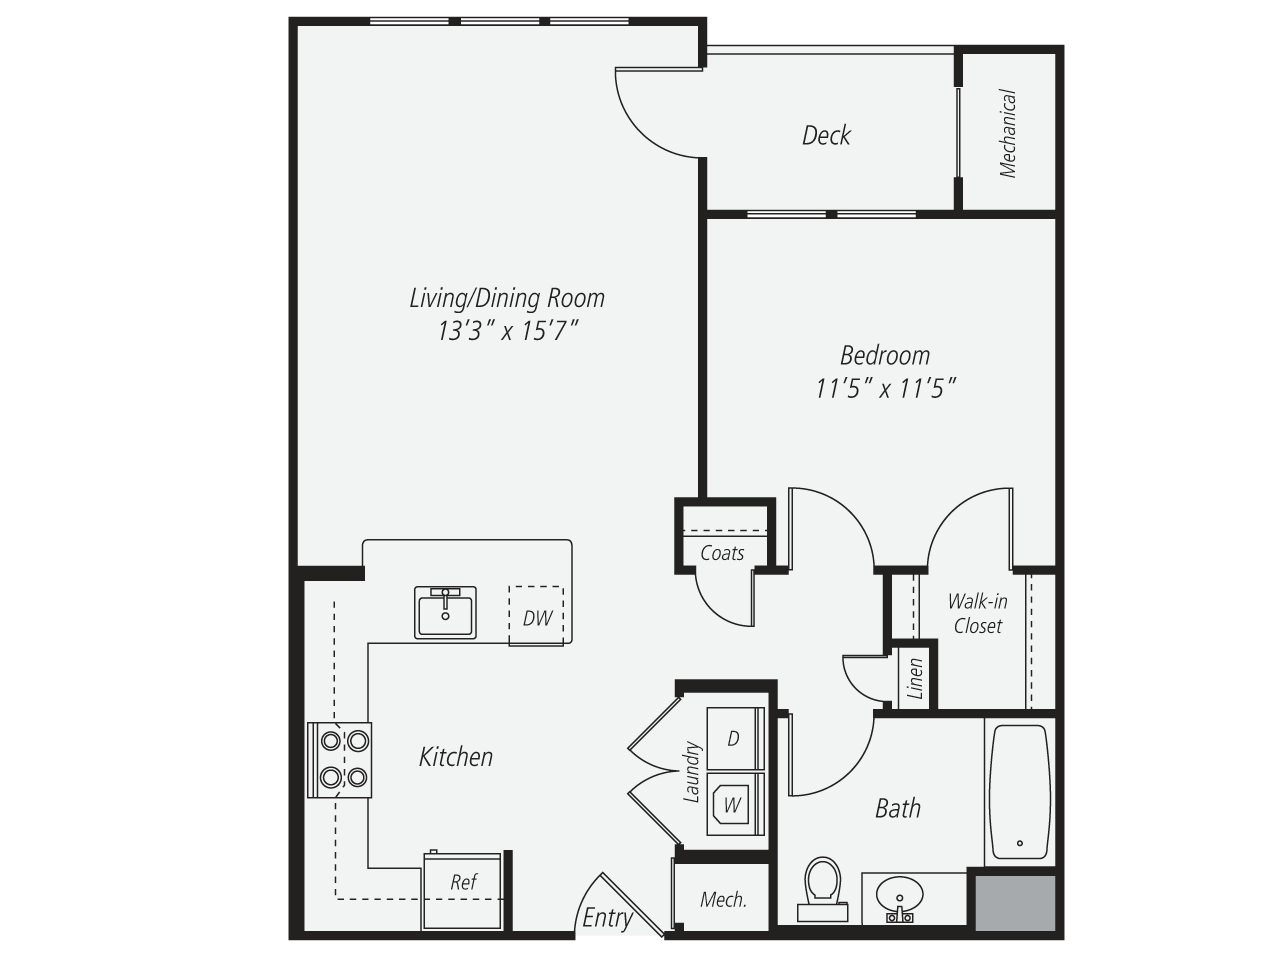 Floorplan for Apartment #250, 1 bedroom unit at Halstead Norwalk